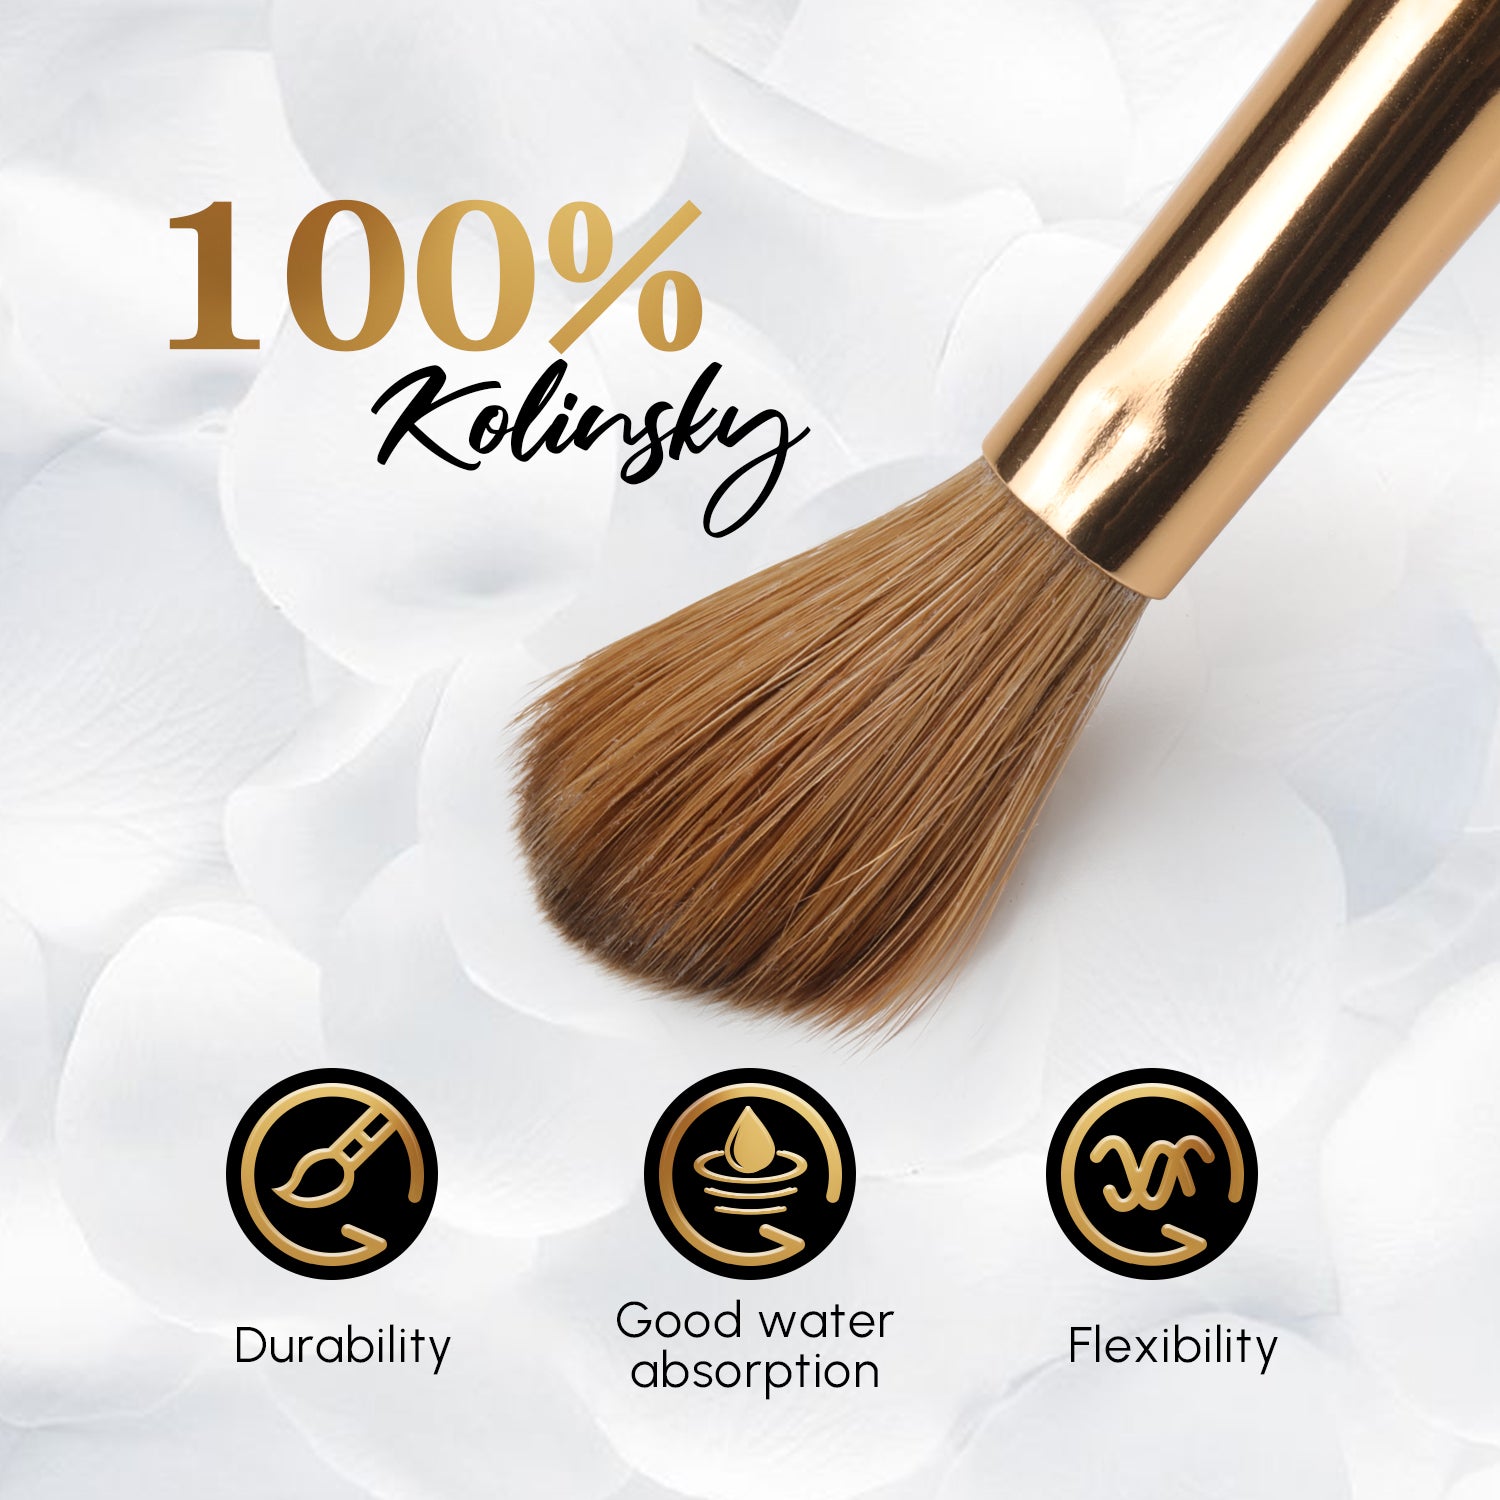 100% Kolinsky Acrylic Brush